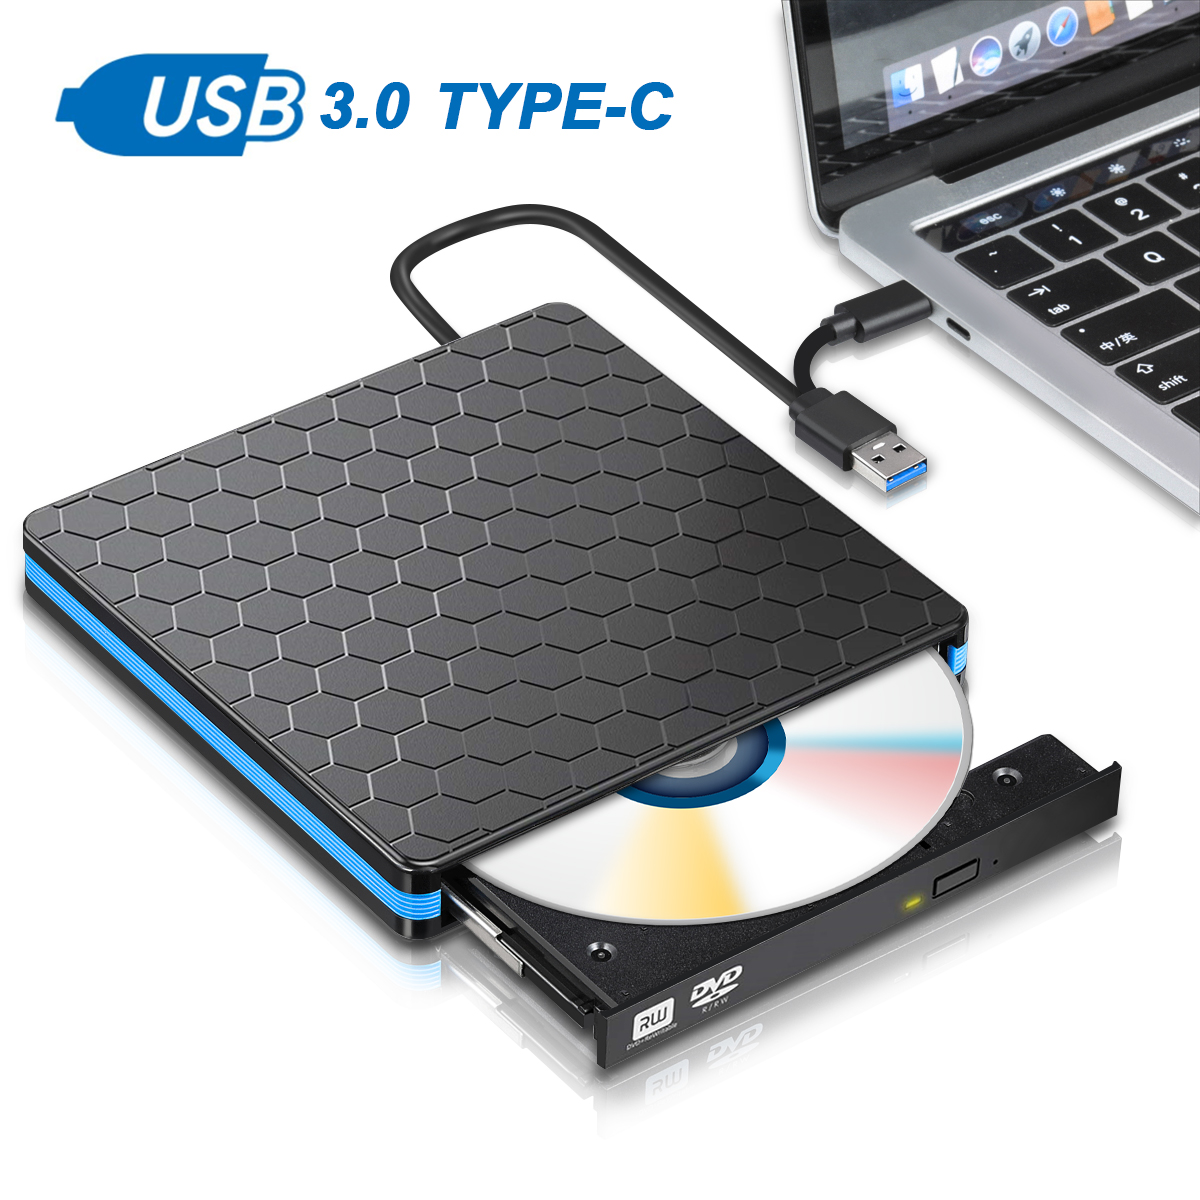 USB 2.0 External CD/DVD Drive for Compaq presario v3221au 